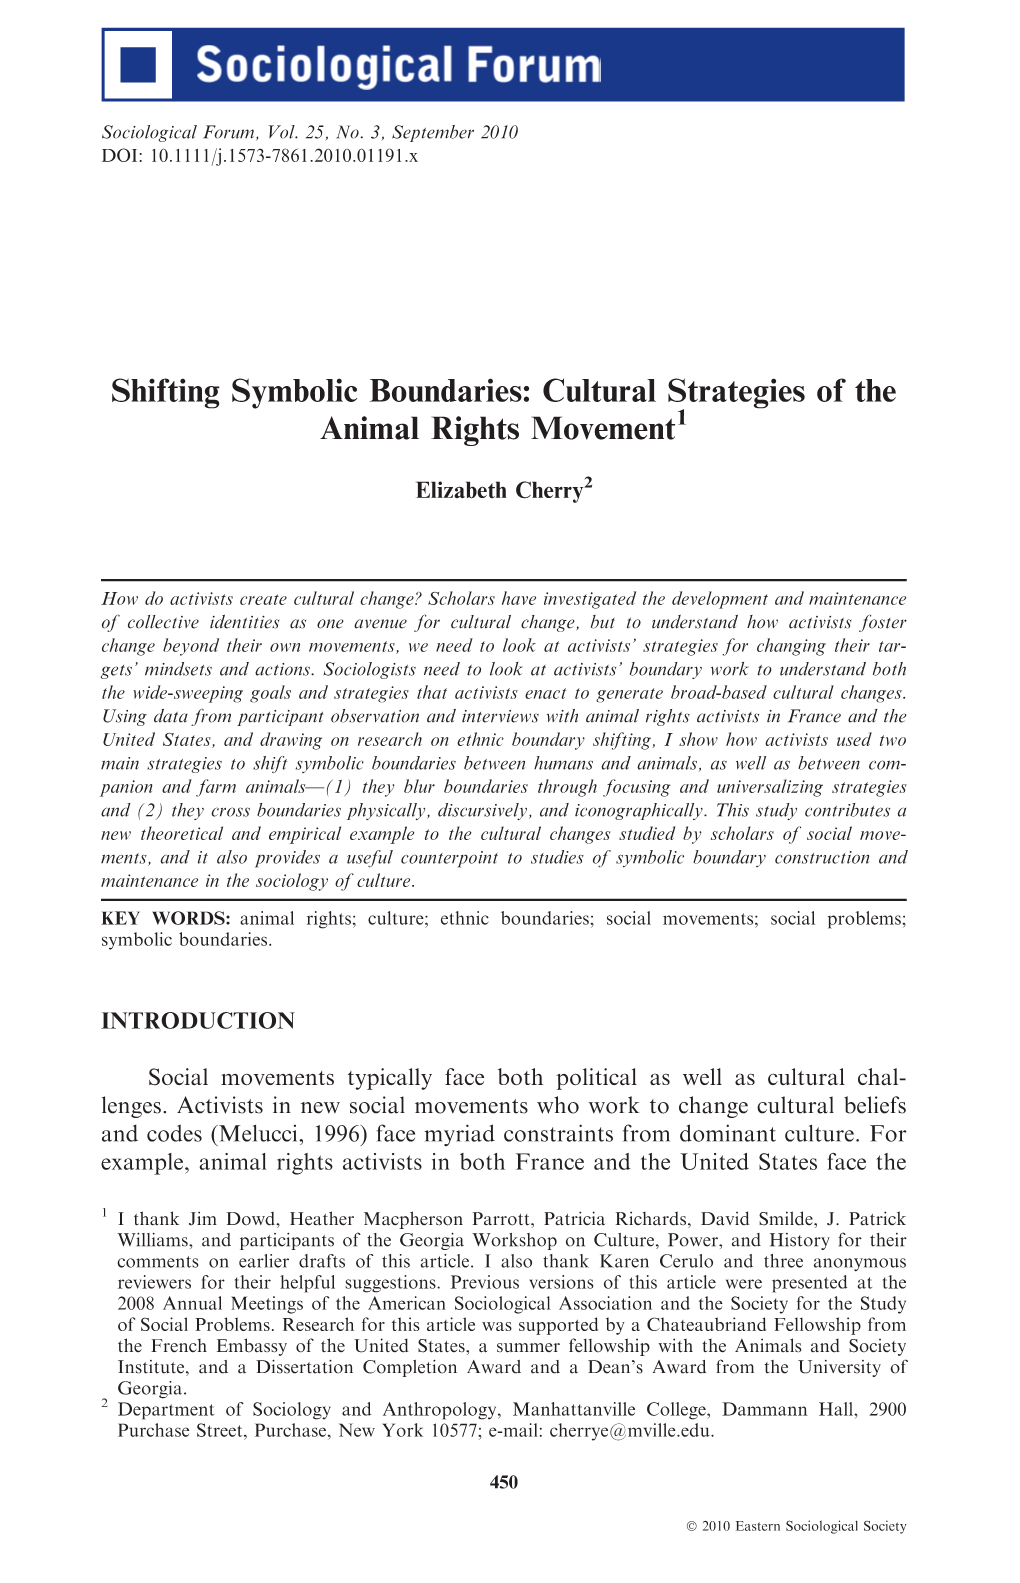 Shifting Symbolic Boundaries: Cultural Strategies of the Animal Rights Movement1